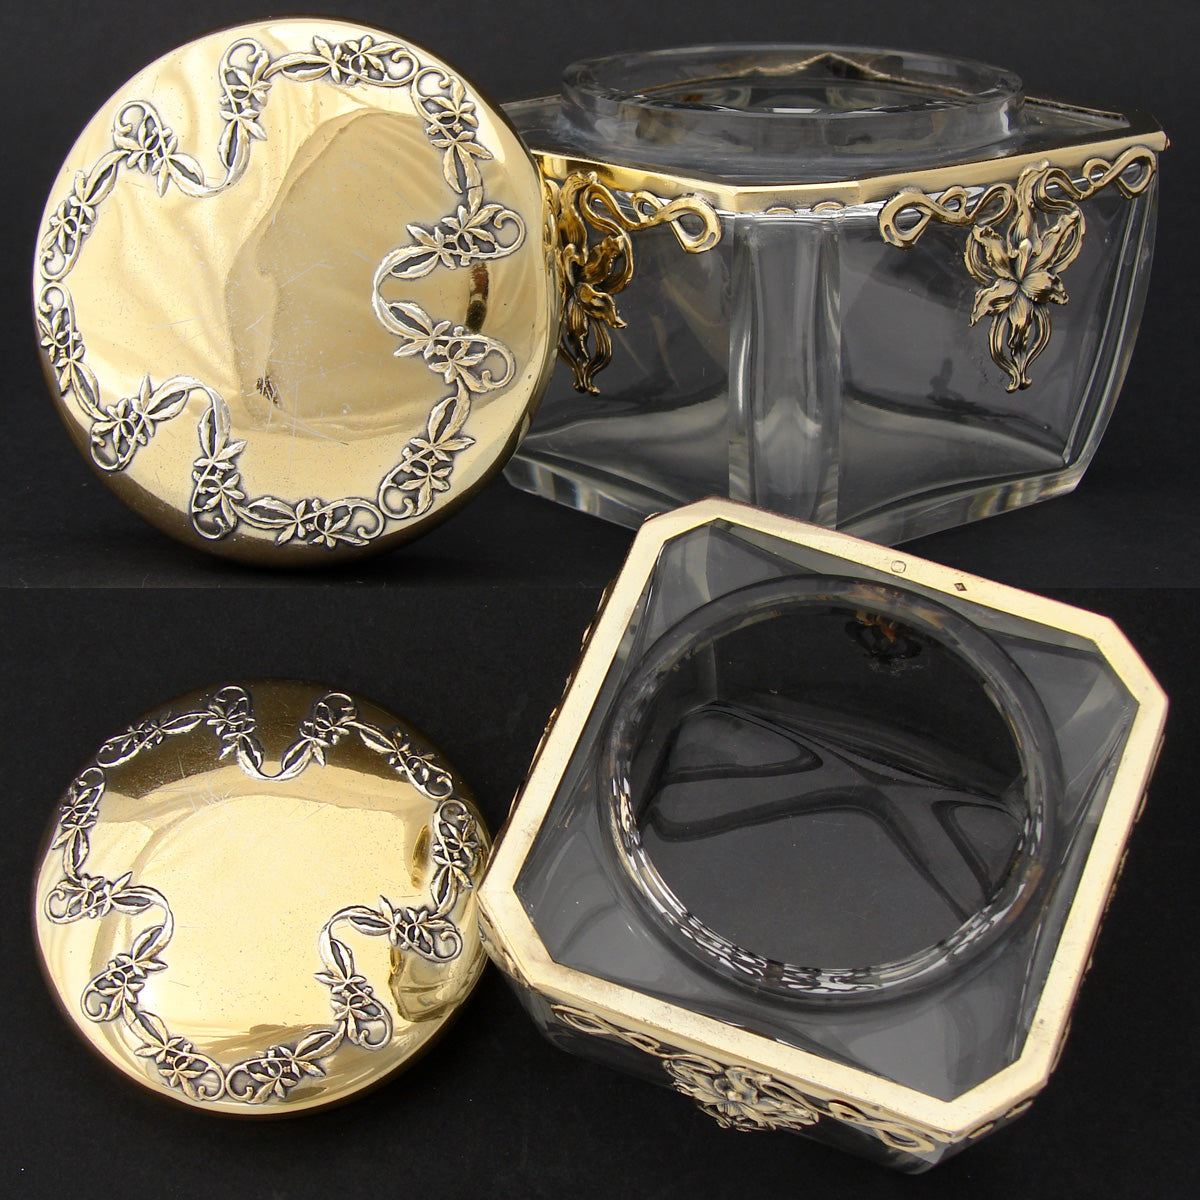 Antique French 18k Gold on Sterling Silver “Vermeil” & Cut Glass 4” Vanity or Powder Jar, Art Nouveau Floral